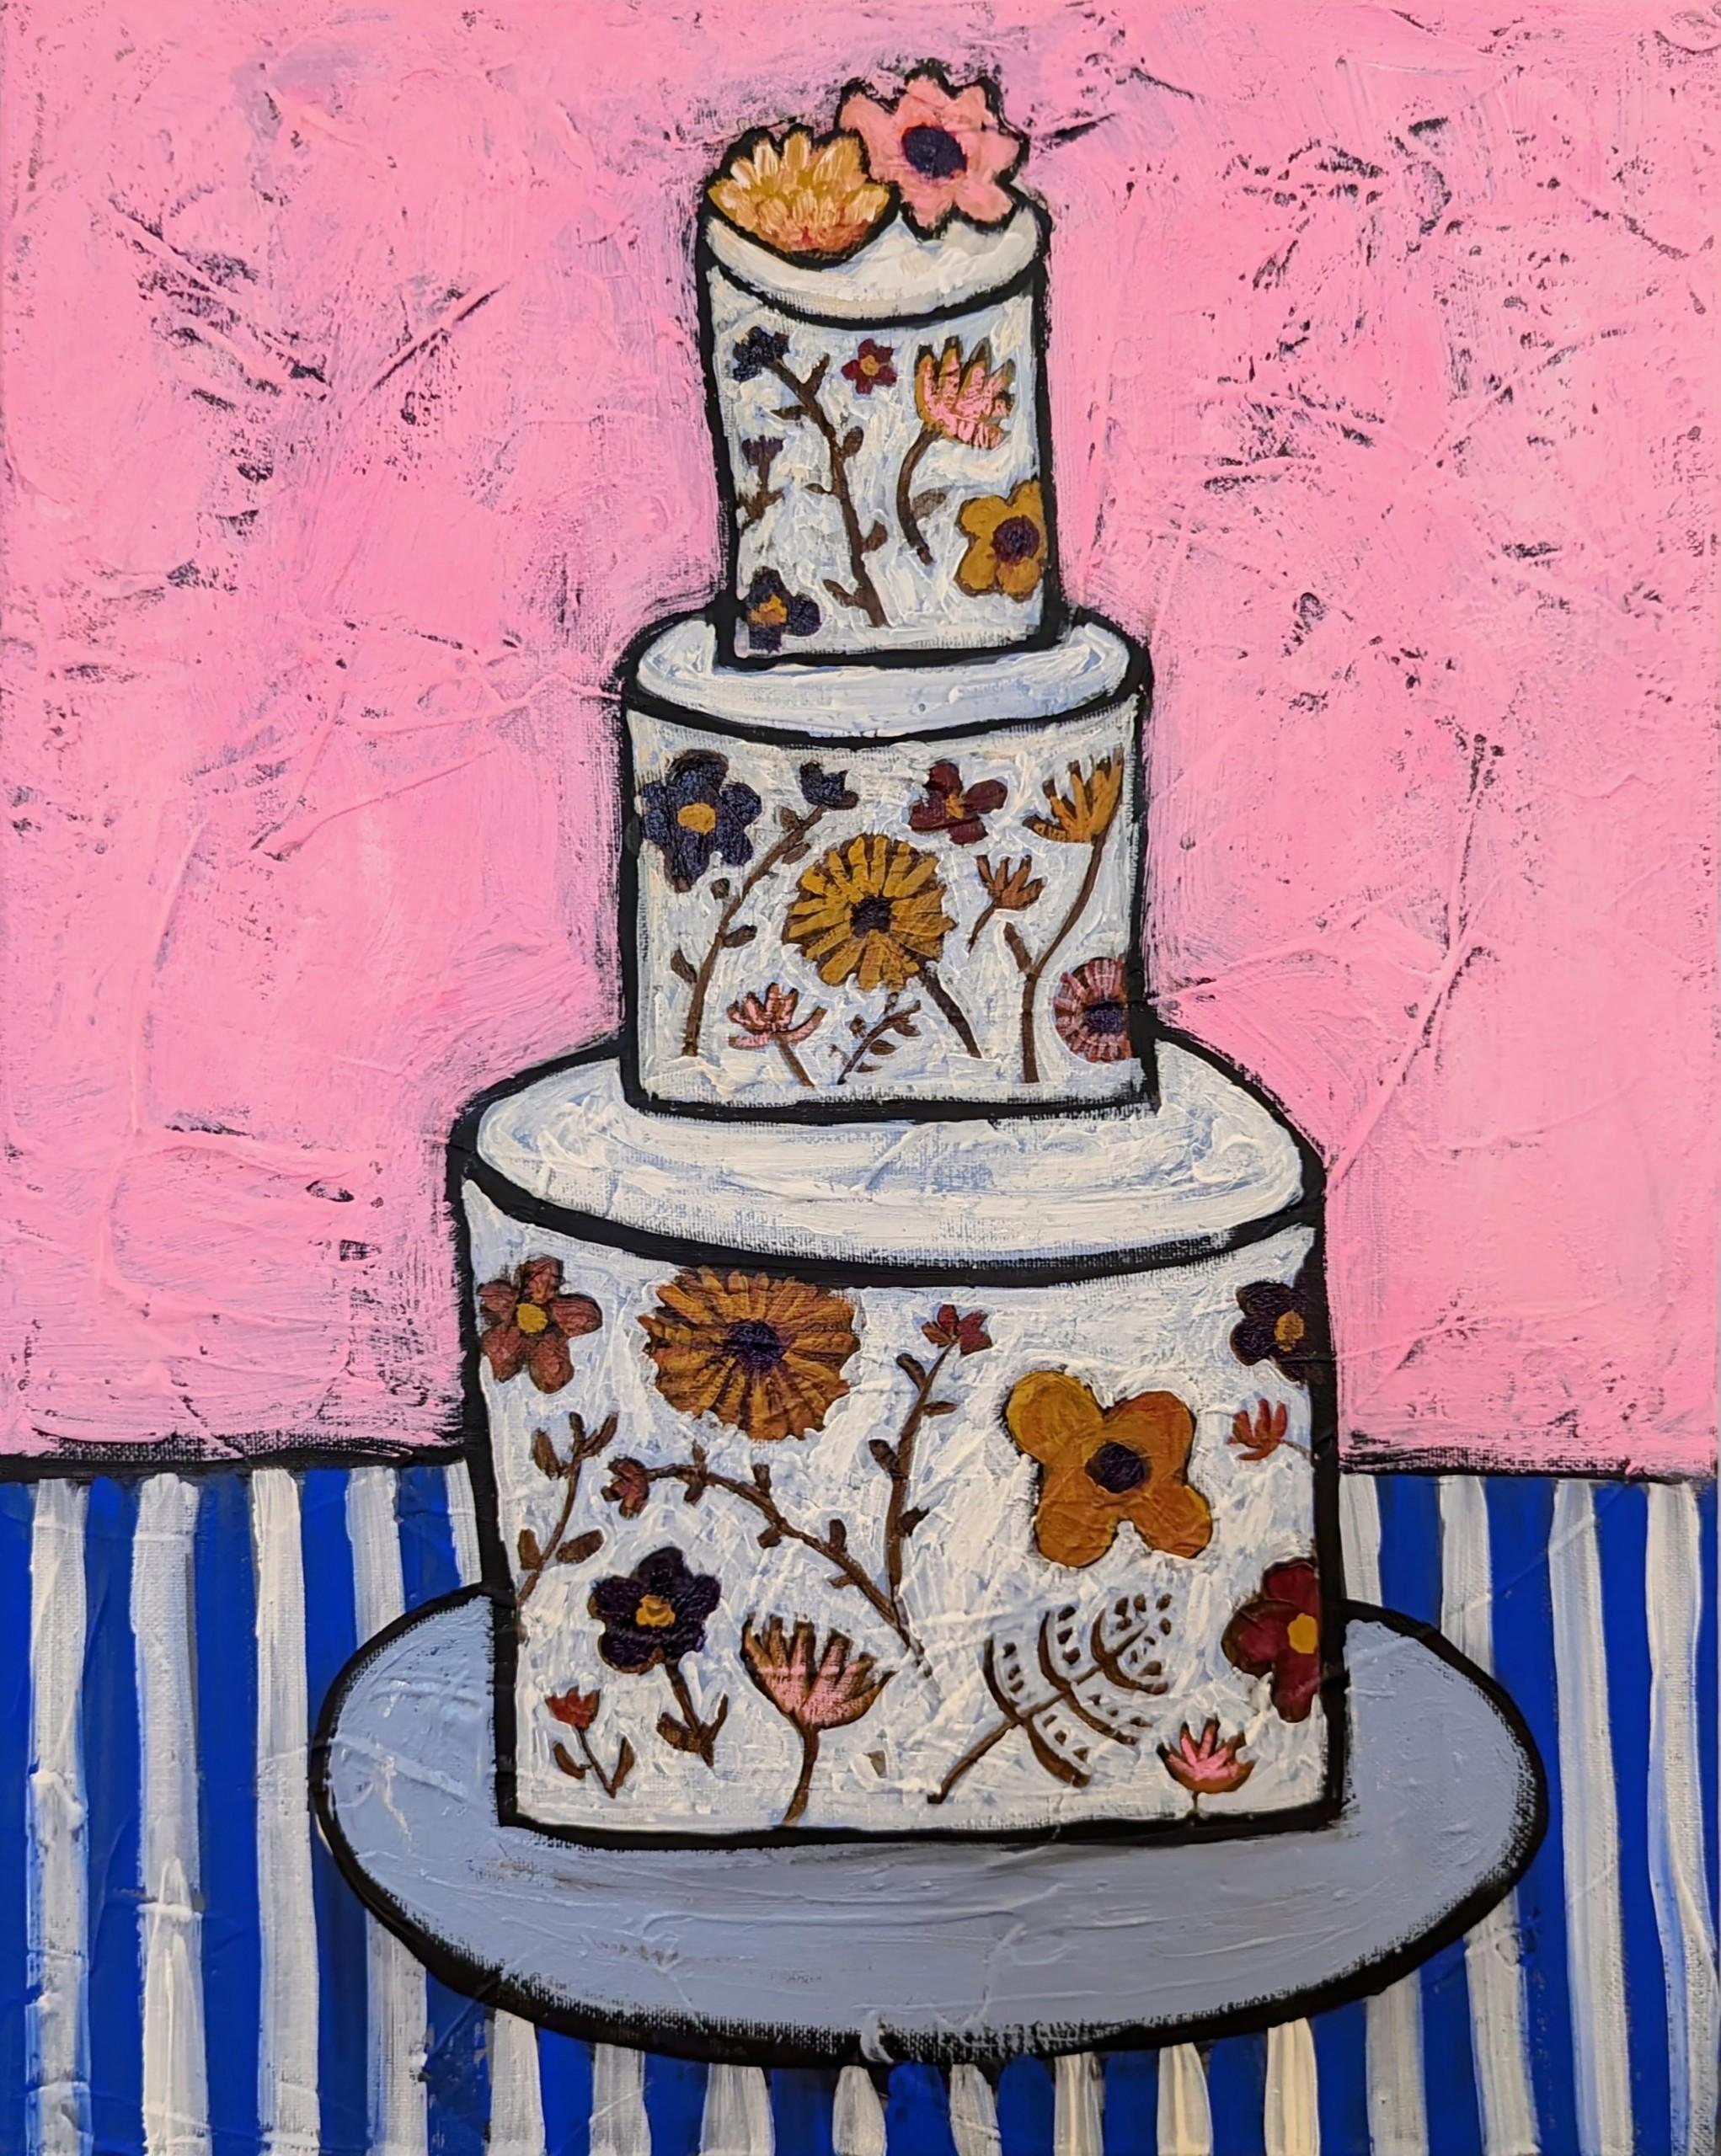 Incredible Edible Flower Cake, Bright Still Life Food Art, Contemporary Pop Art